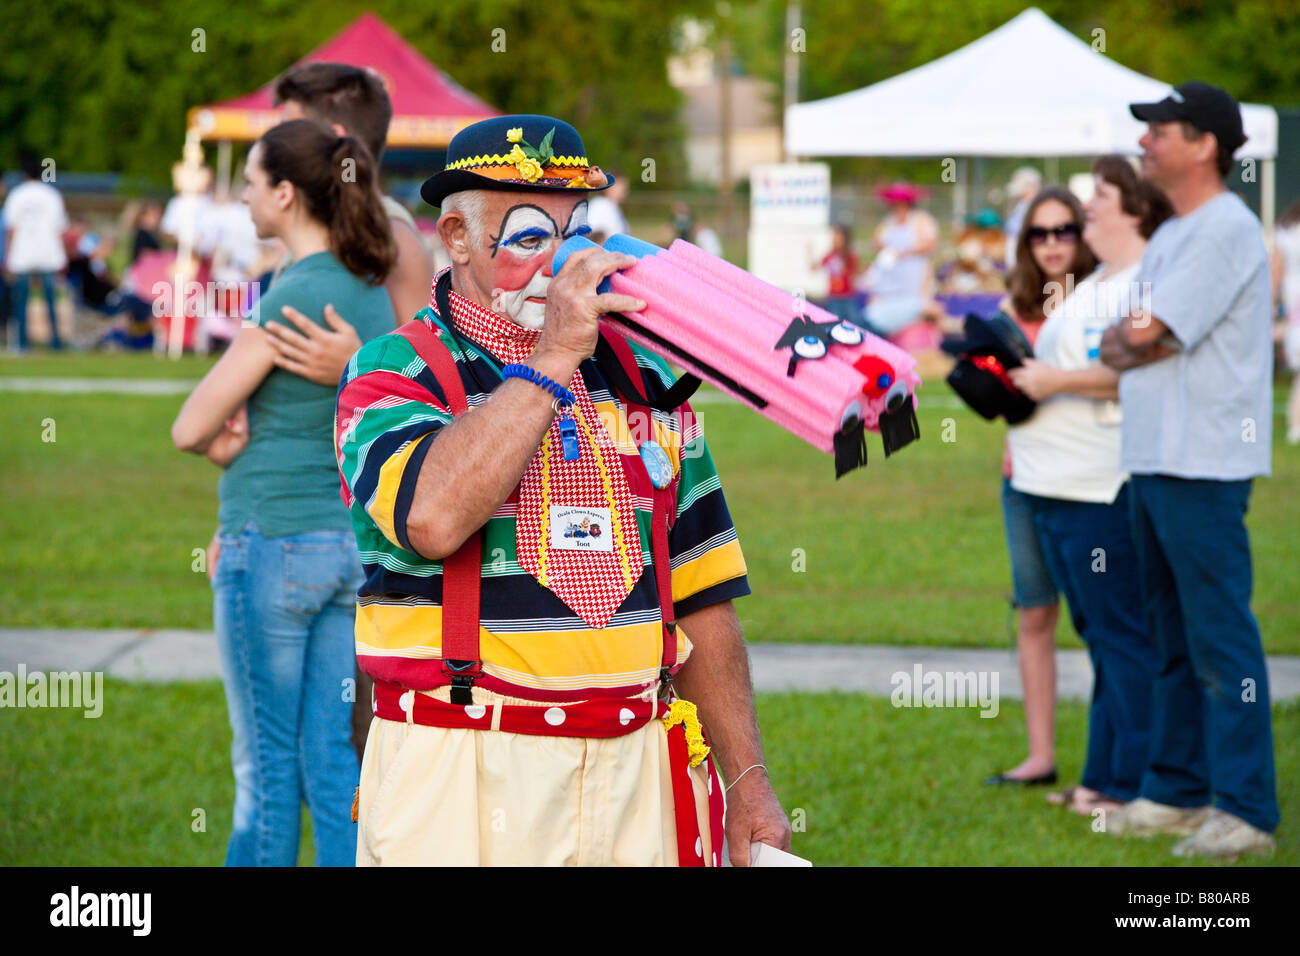 Bunten Clown mit Schaum Spielzeug Fernglas unterhält an American Cancer Society Relay For Life Charity-event Stockfoto